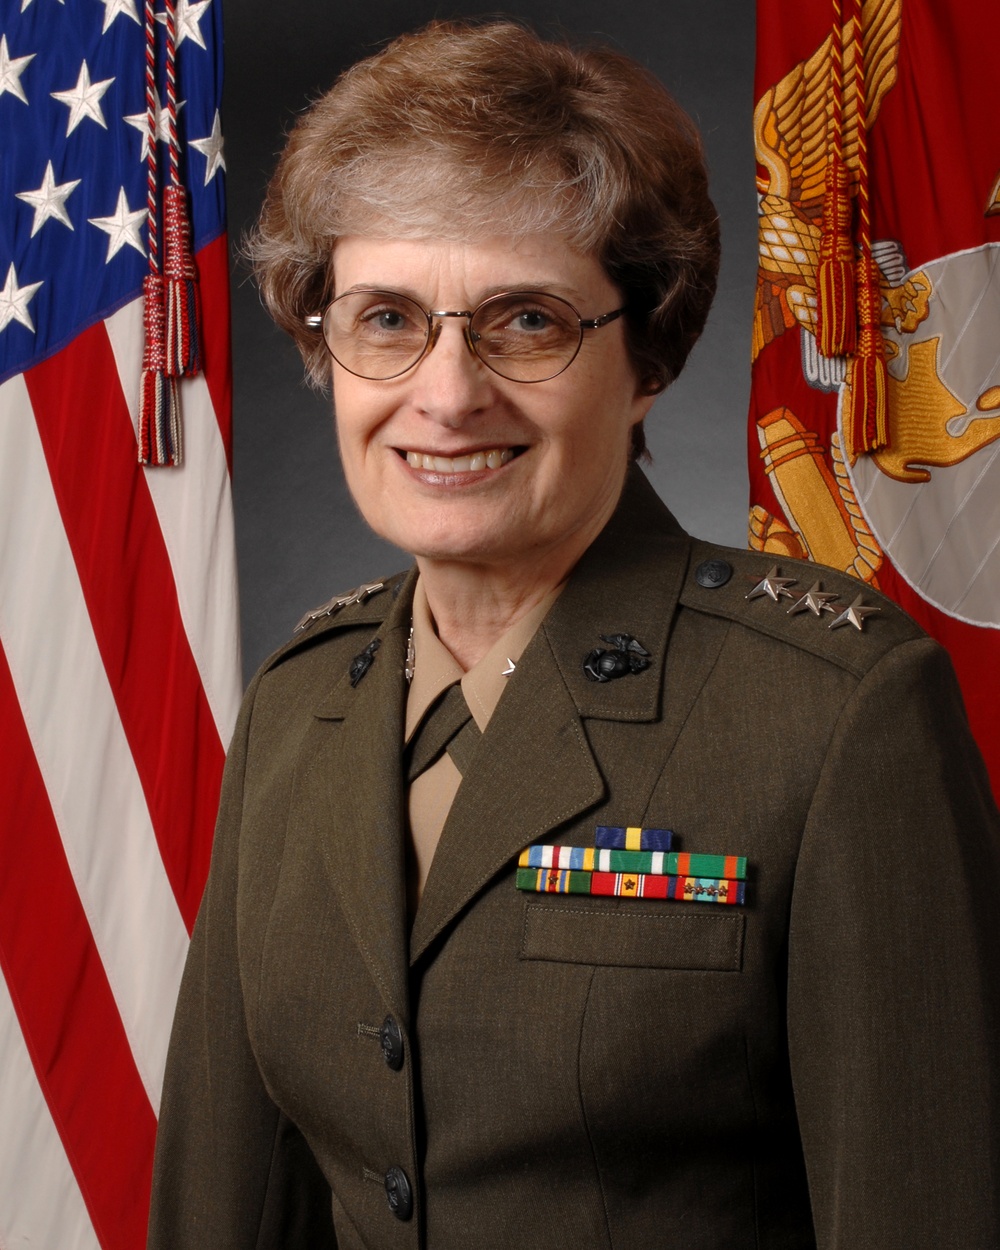 Lt. Gen. Mutter Command Portrait